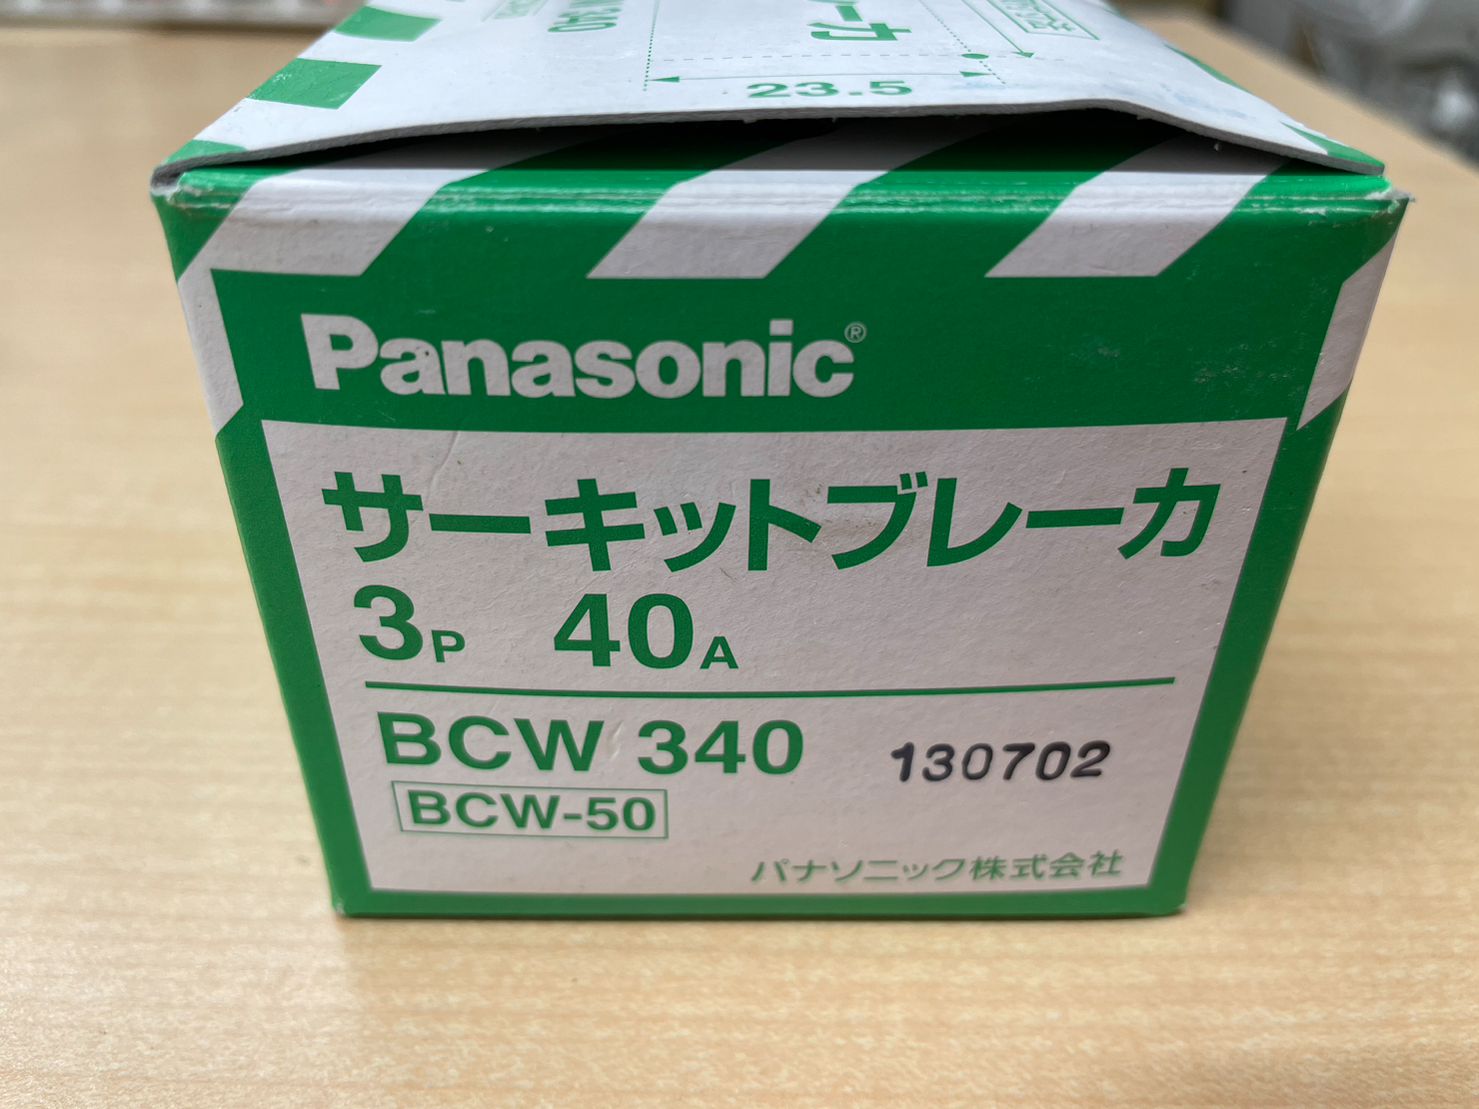 Panasonic サーキットブレーカ BCW340 - 材料、資材